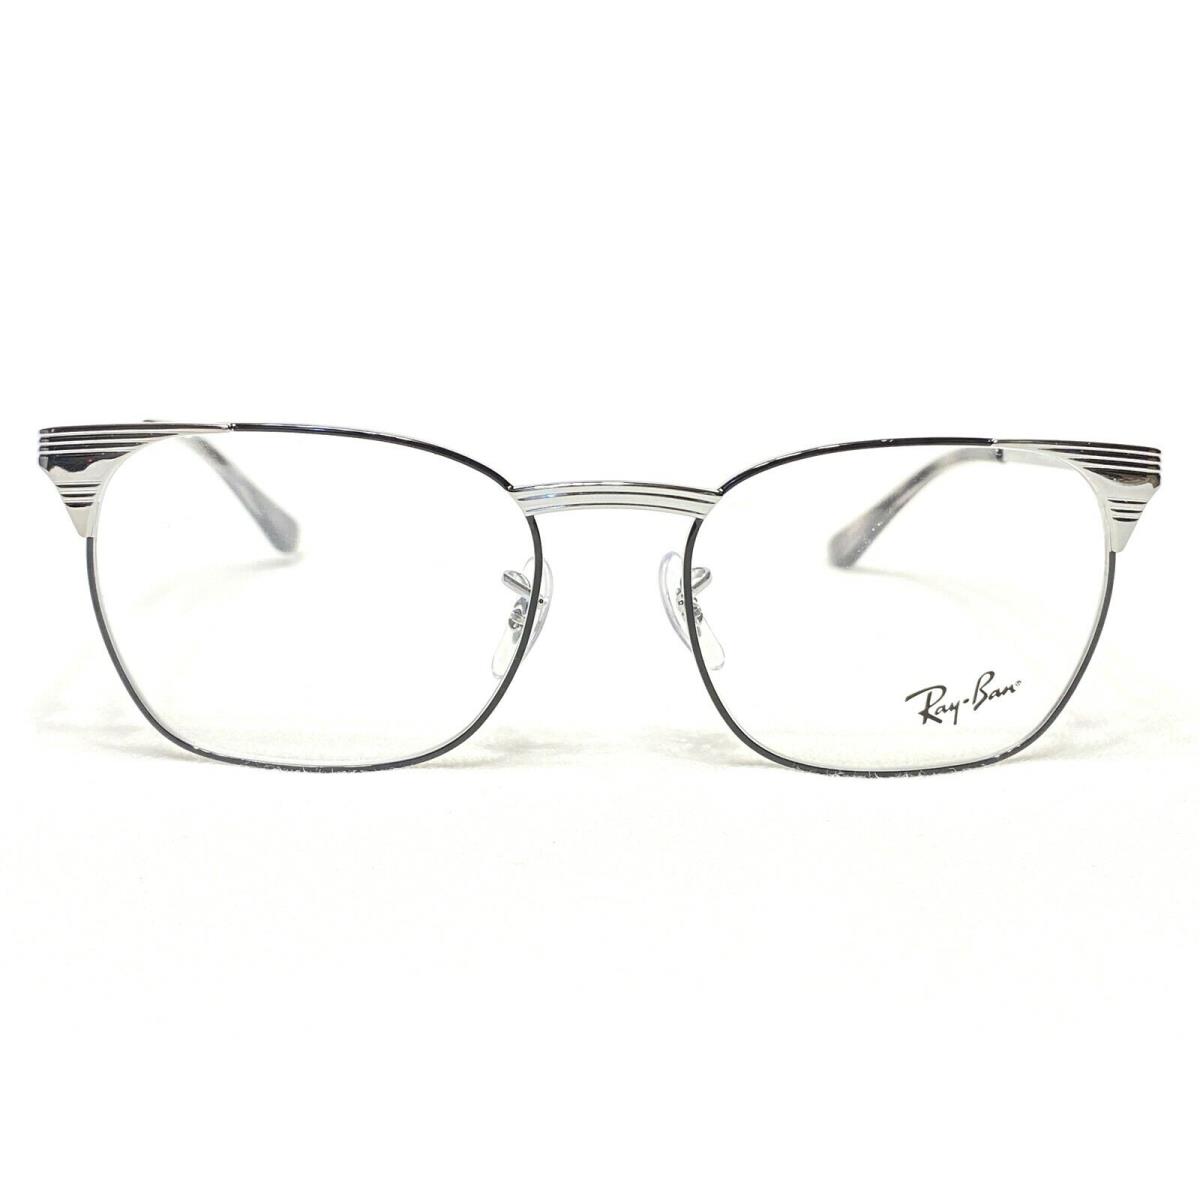 Ray Ban Signet RB6386 2901 Mens Gunmetal Modern Eyeglasses Frames 53/18 140